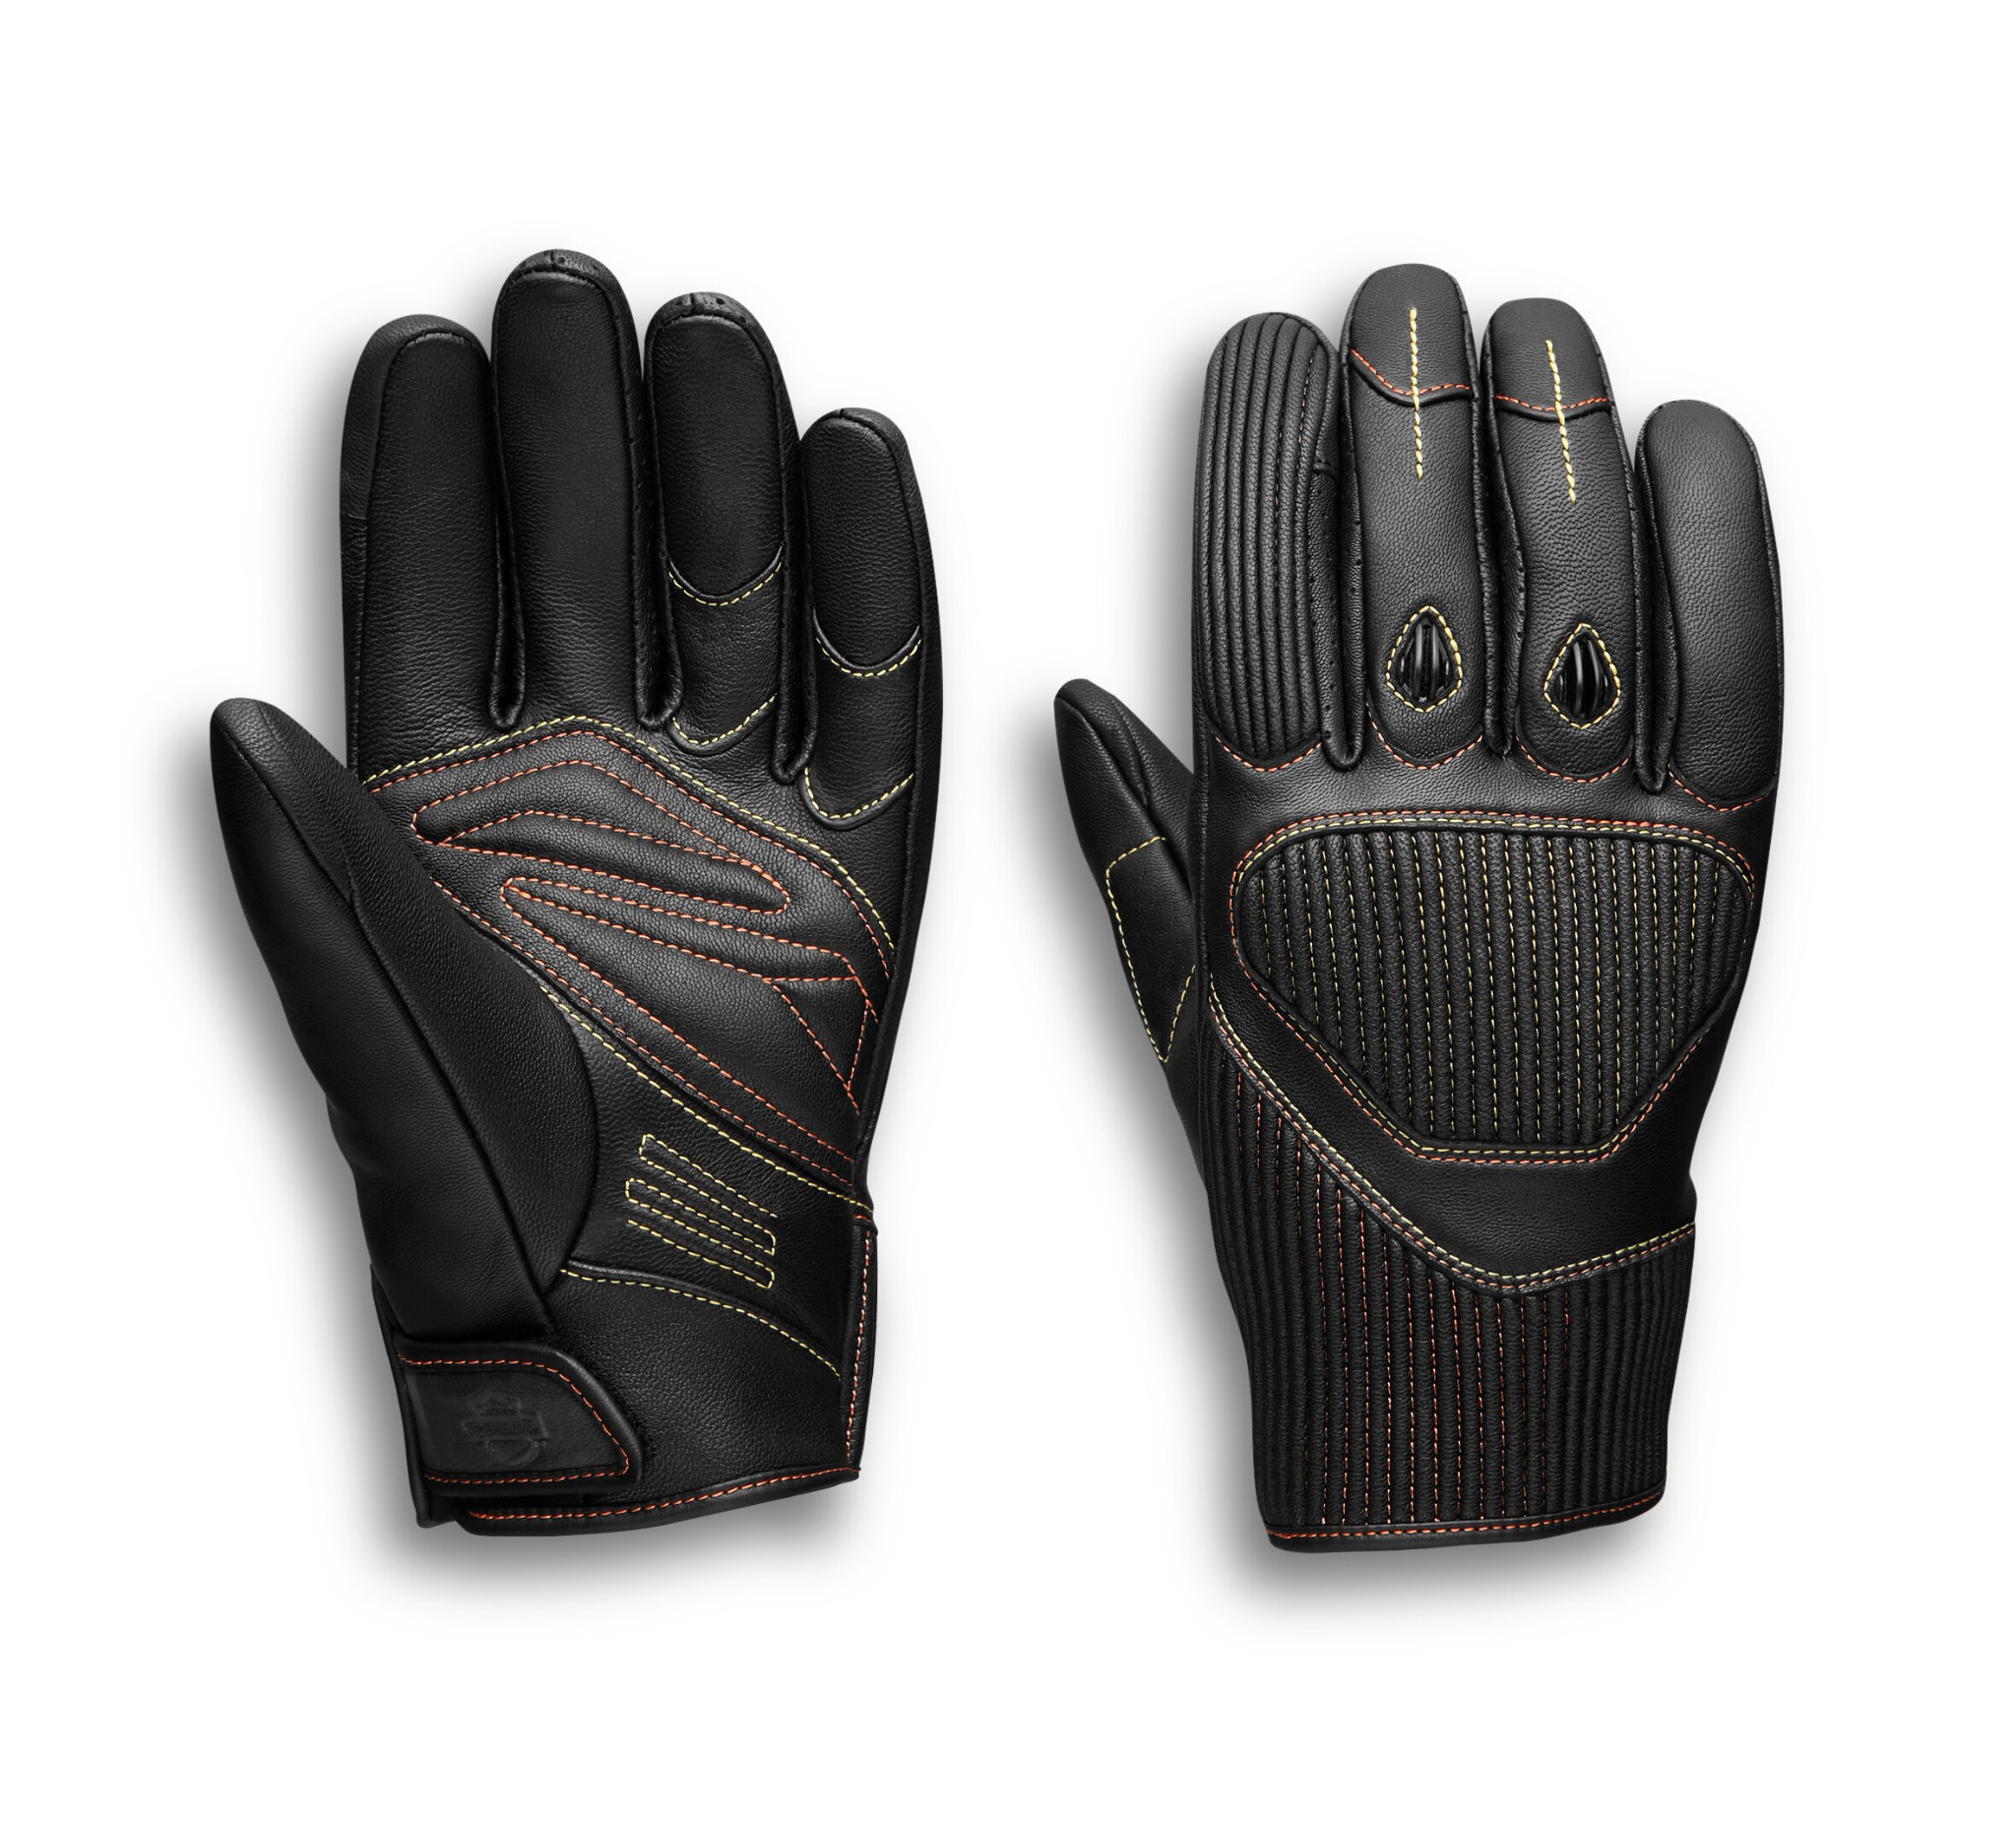 Harley Davidson Motorcycle Gloves Online Sale Up To 70 Off